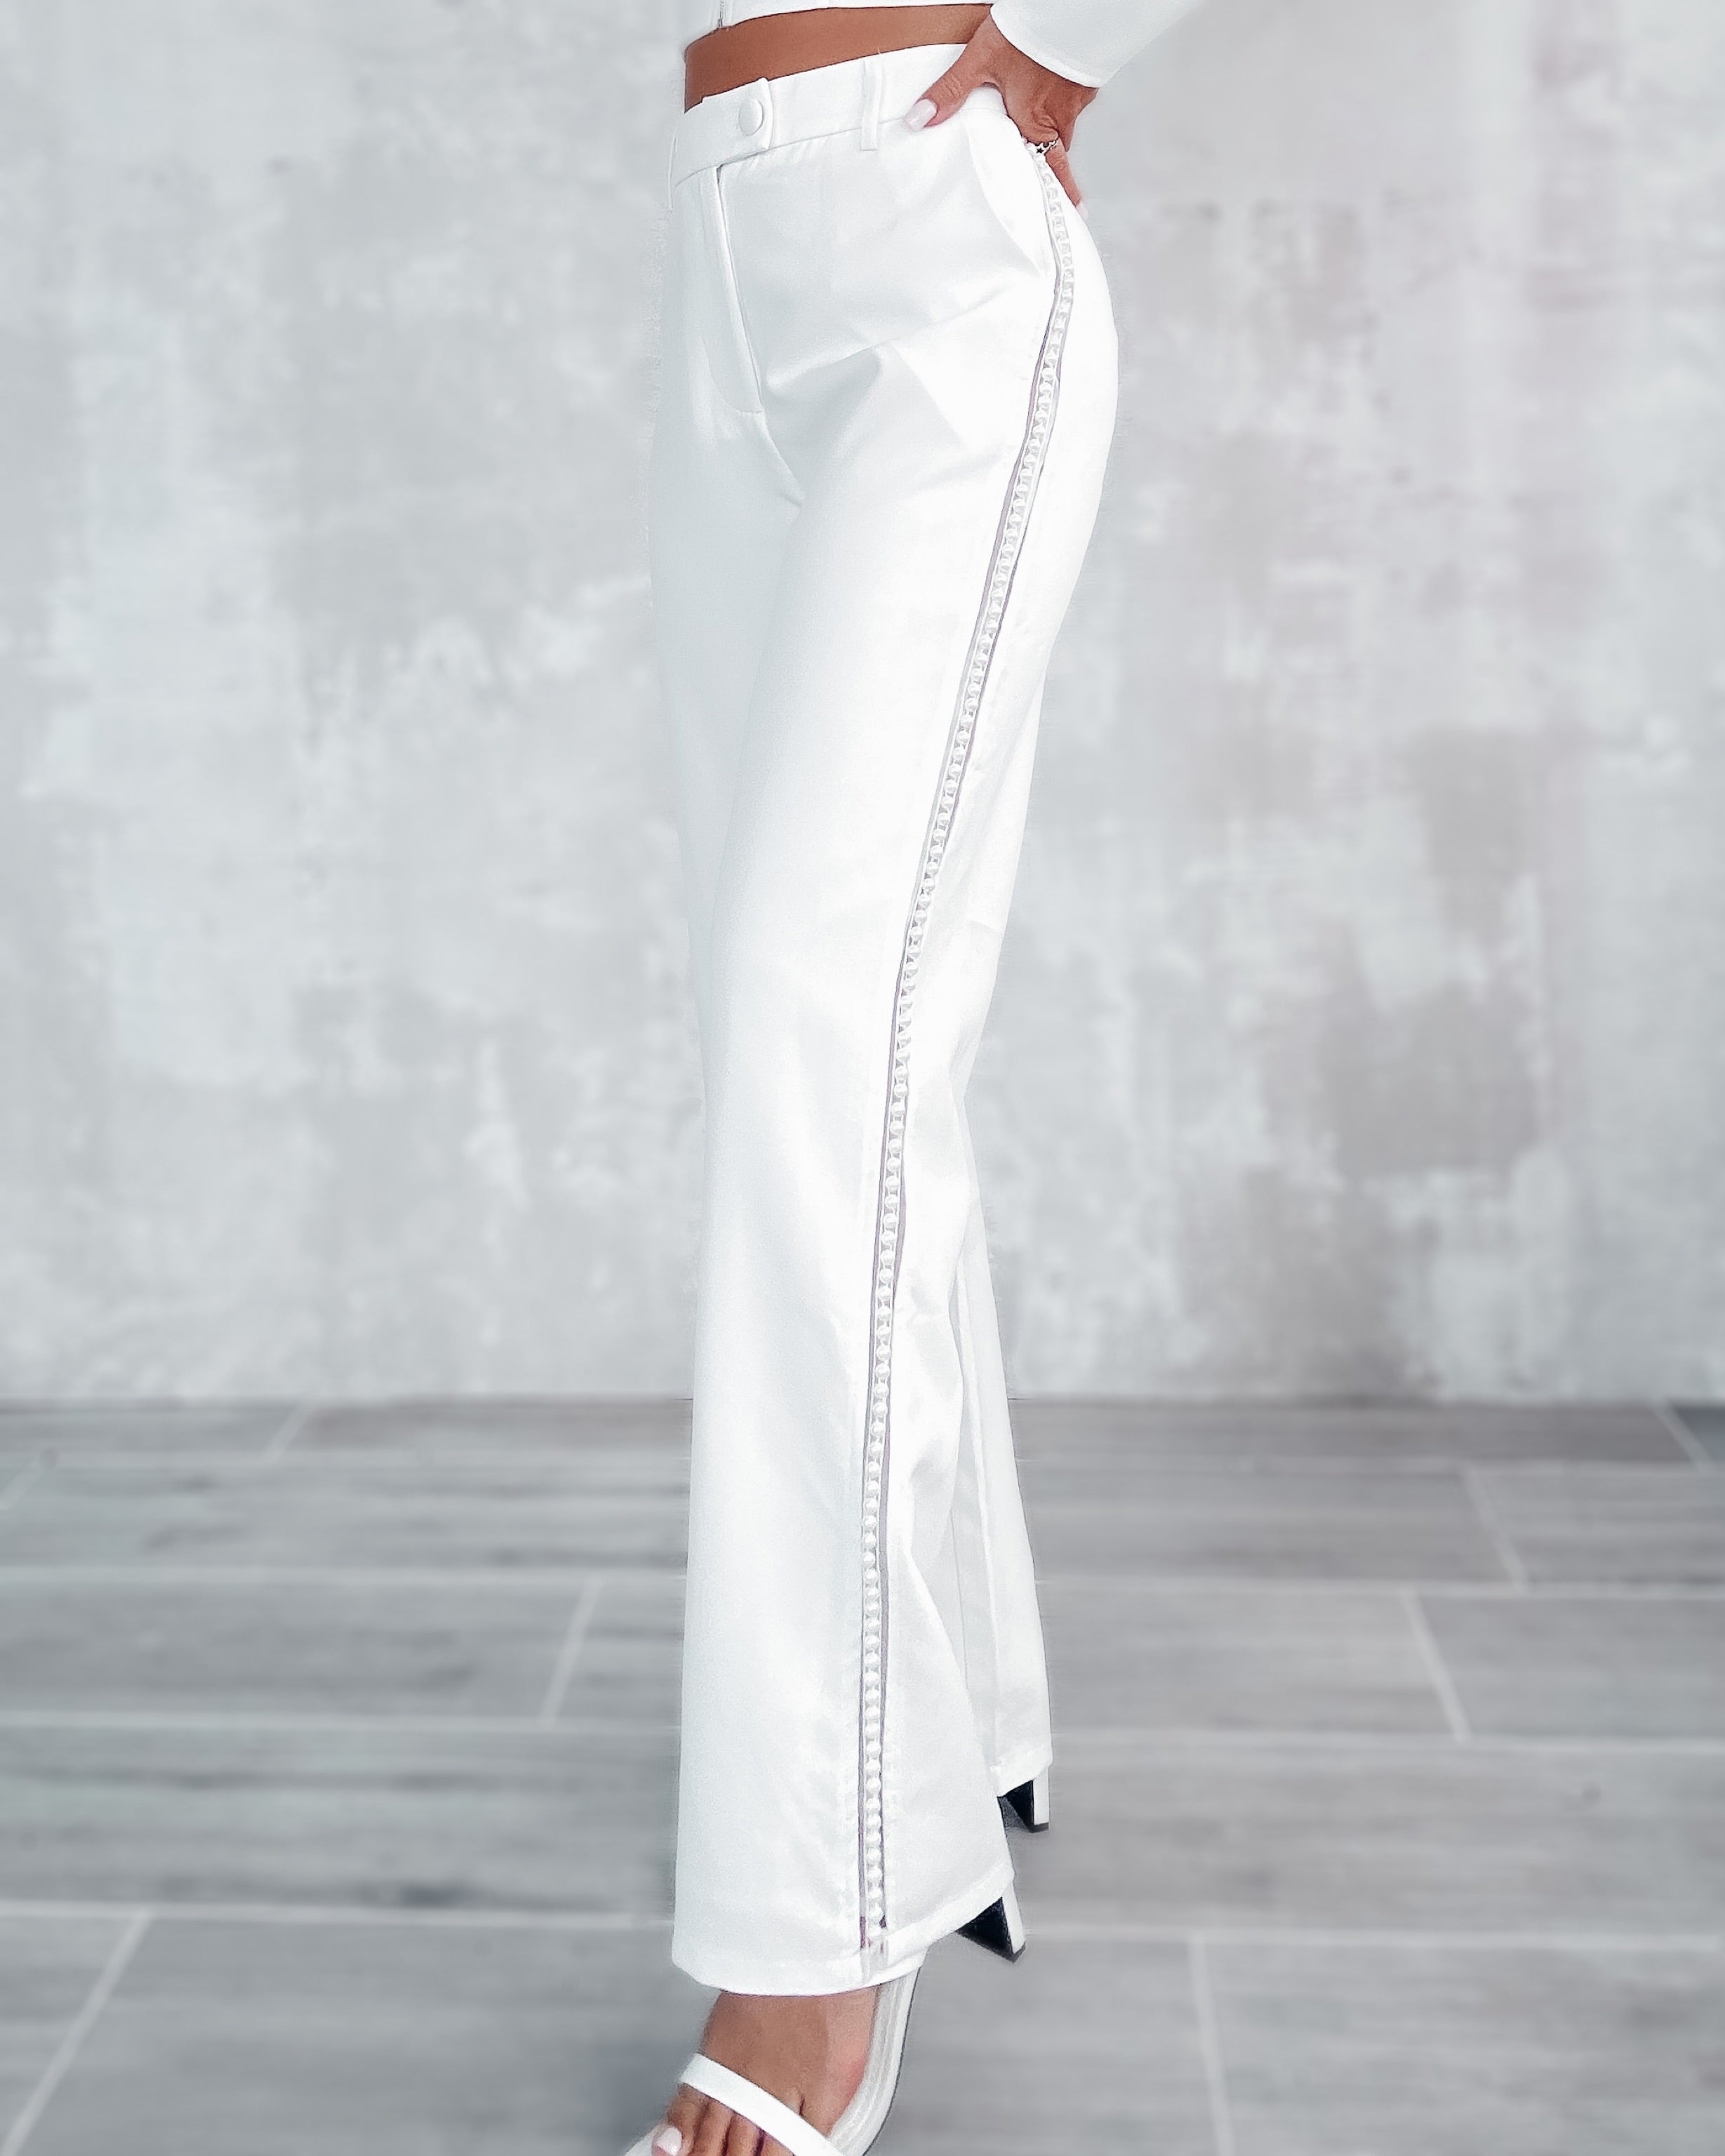 Rue 21 Women's White Embellished Back Pockets Capris Pants Sz 5/6